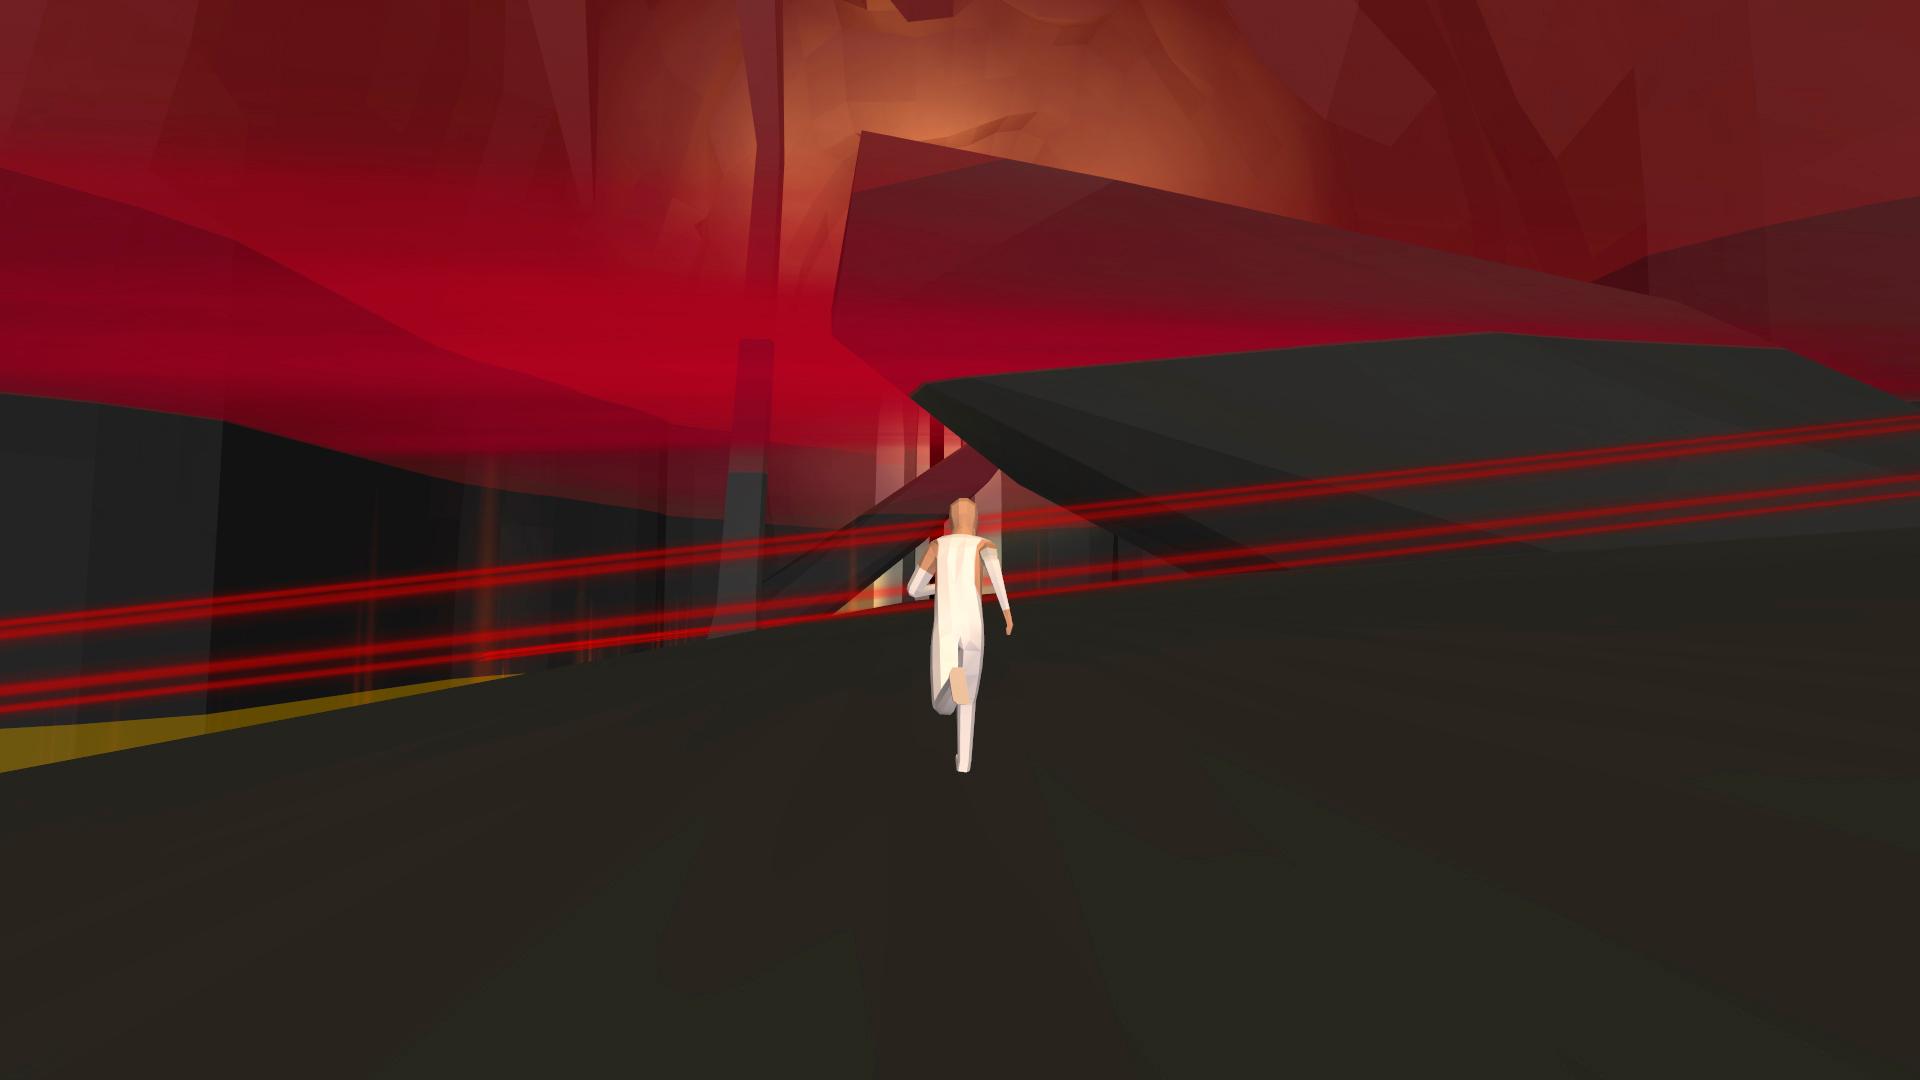 Screenshot №2 from game Laraan